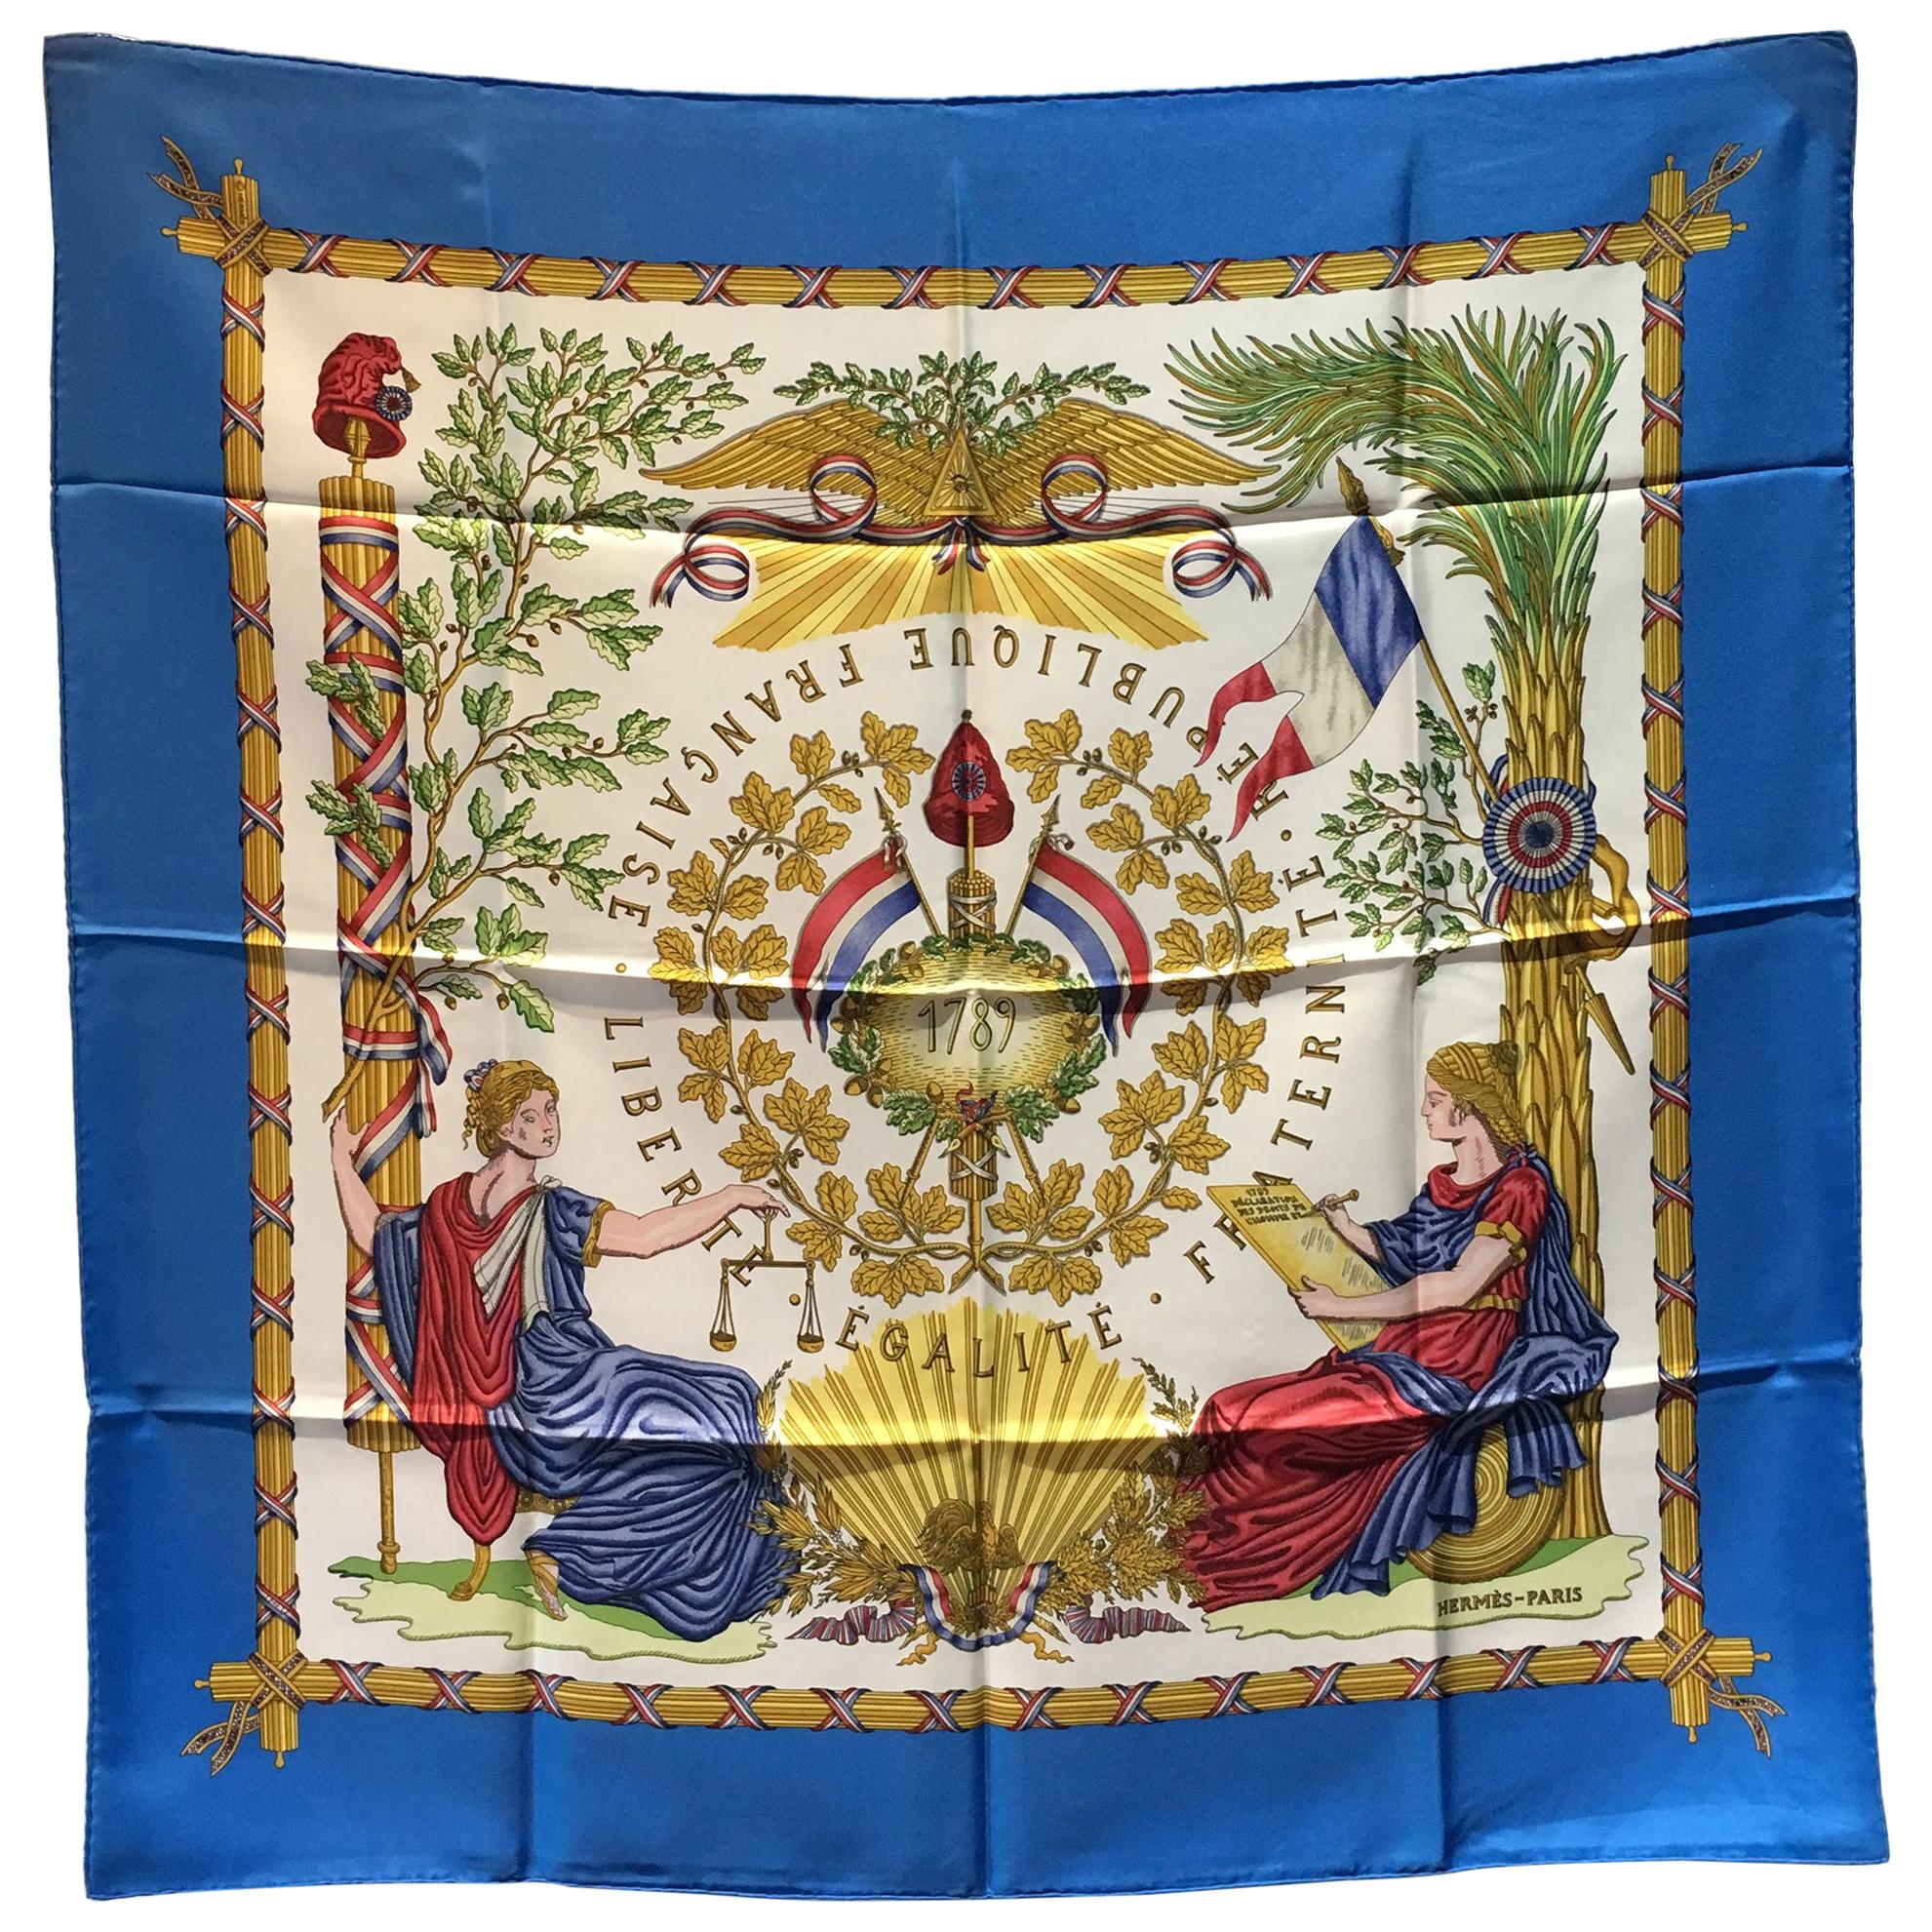 Vintage Hermes 1789 Liberte Egalite Fraternite Silk Scarf in Blue at ...